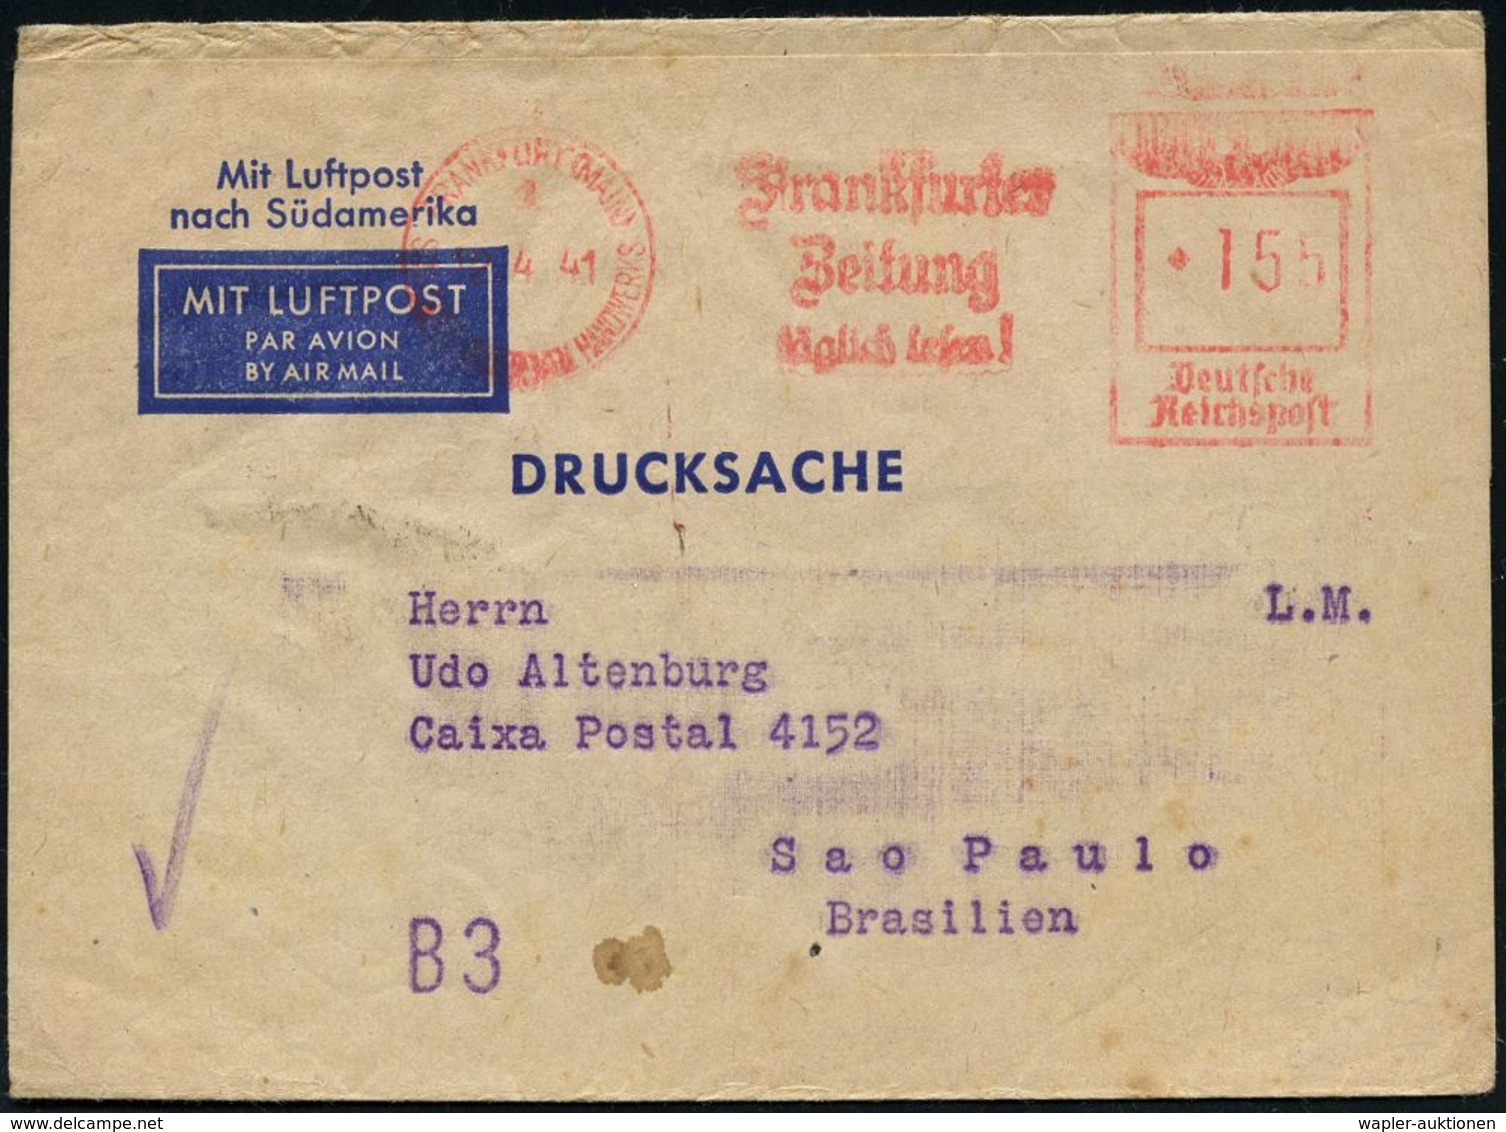 FLUG- & KATAPULTPOST SÜDAMERIKA : FRANKFURT (MAIN)1/ SDH/ Frankfurter/ Zeitung/ Täglich Lesen! 1941 (Apr.) AFS 155 Pf. A - Autres (Air)